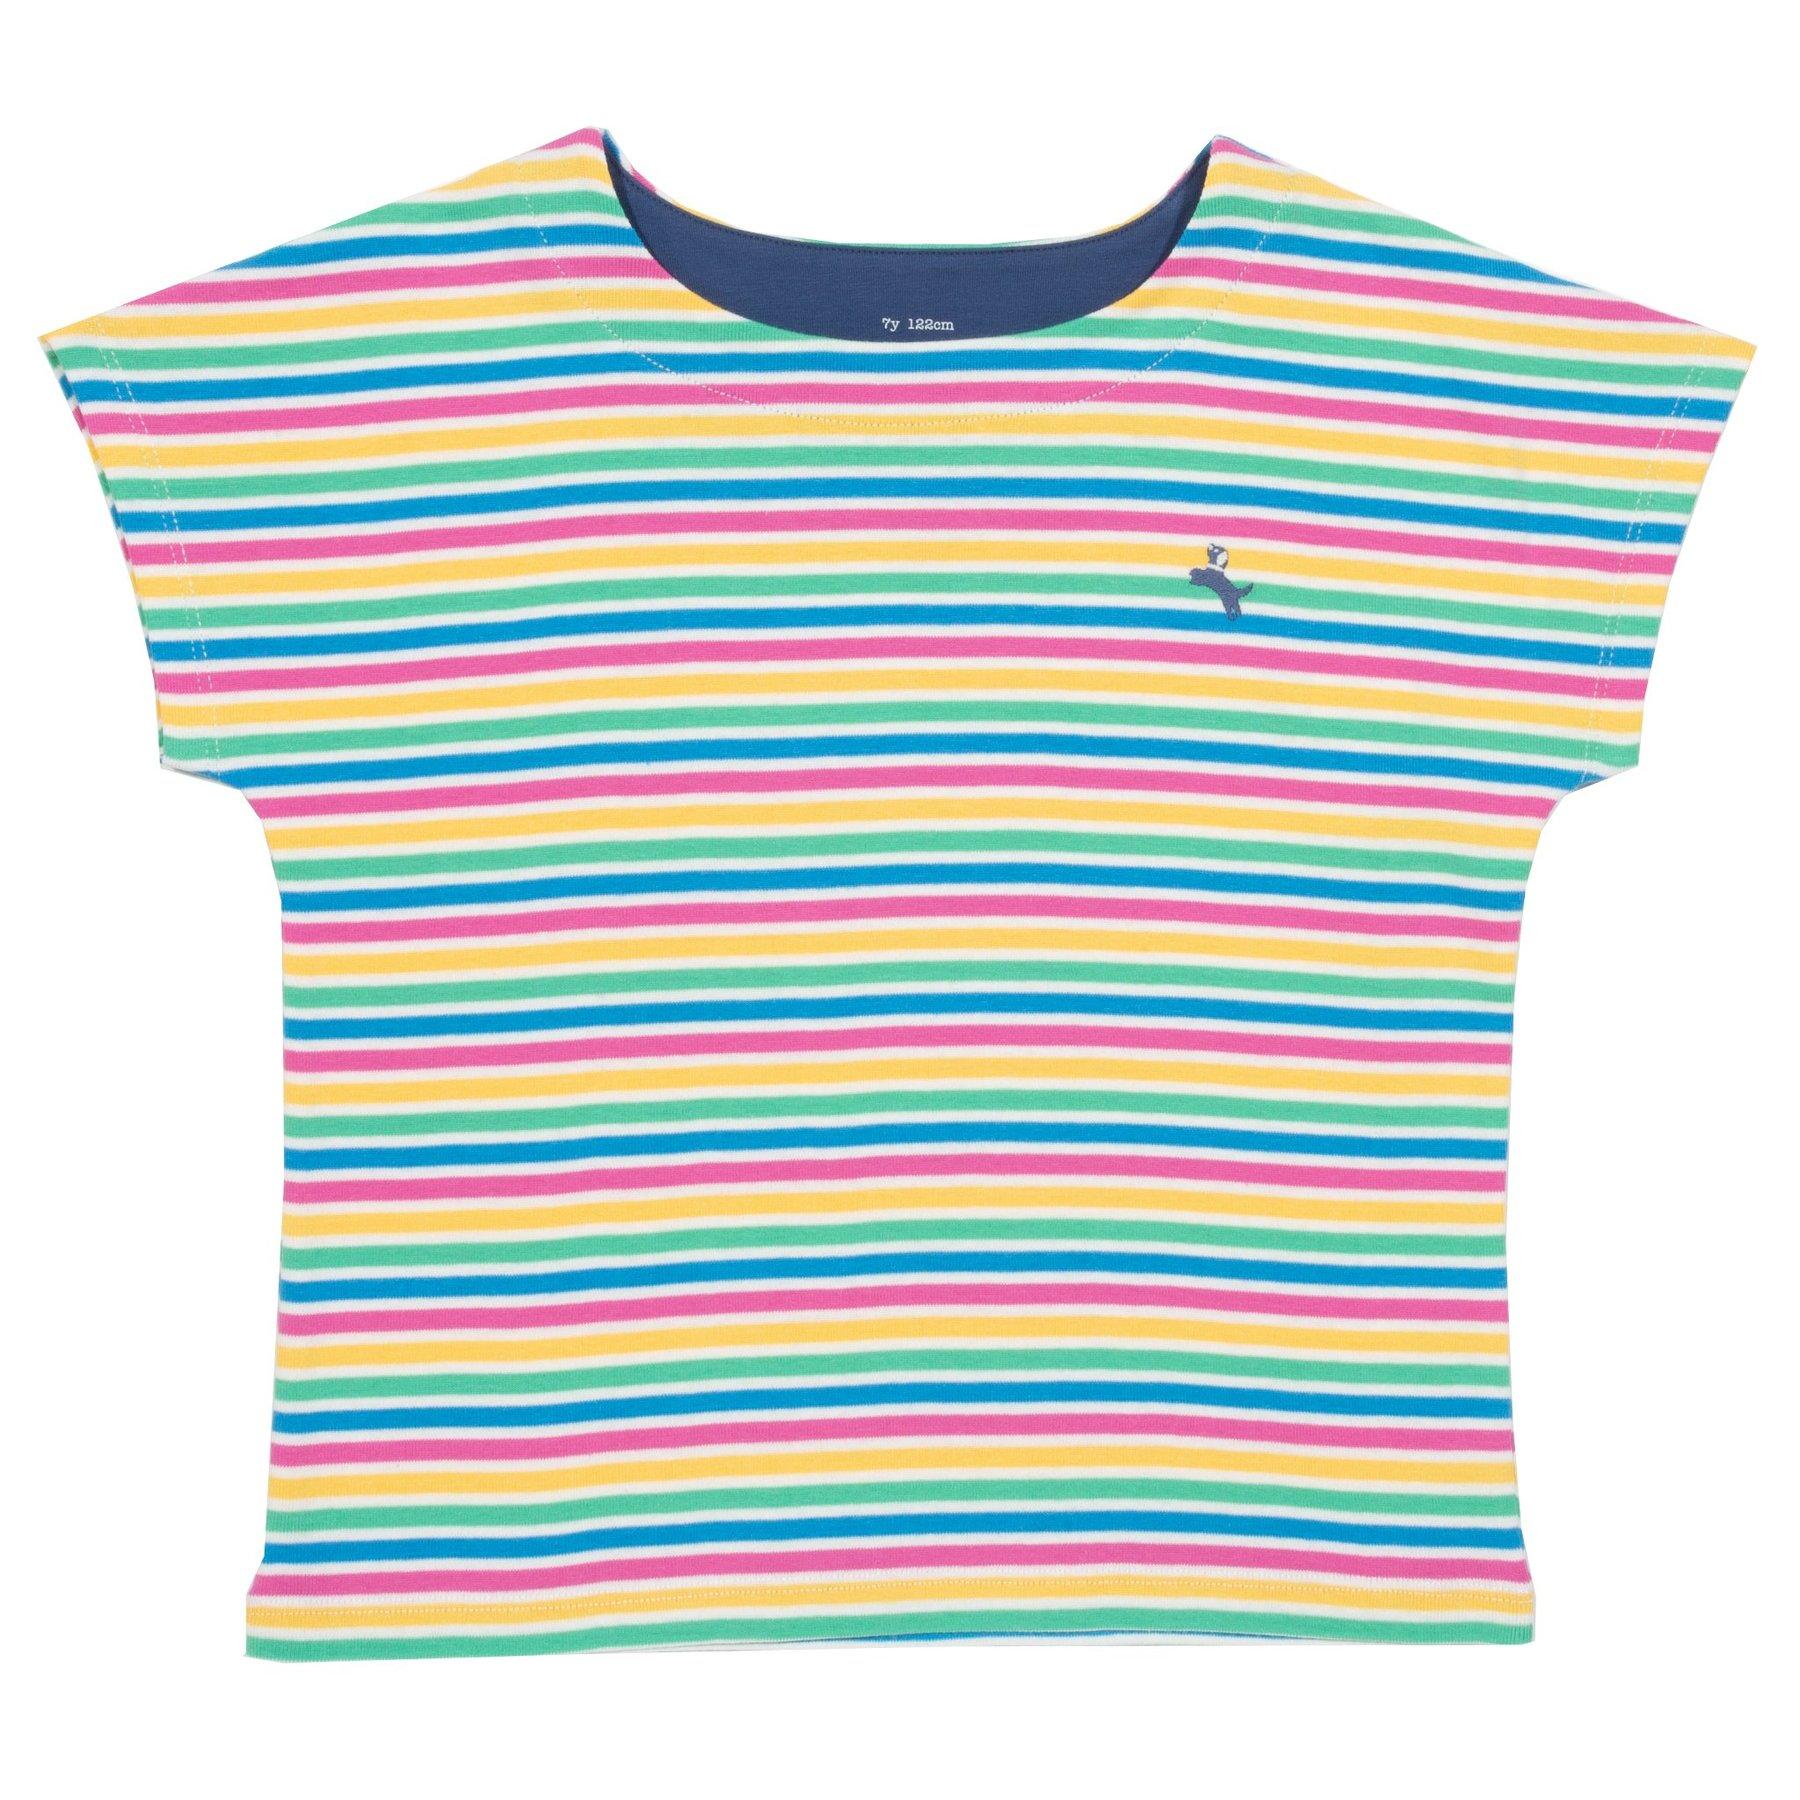 Kite Clothing bright stripe t-shirt front